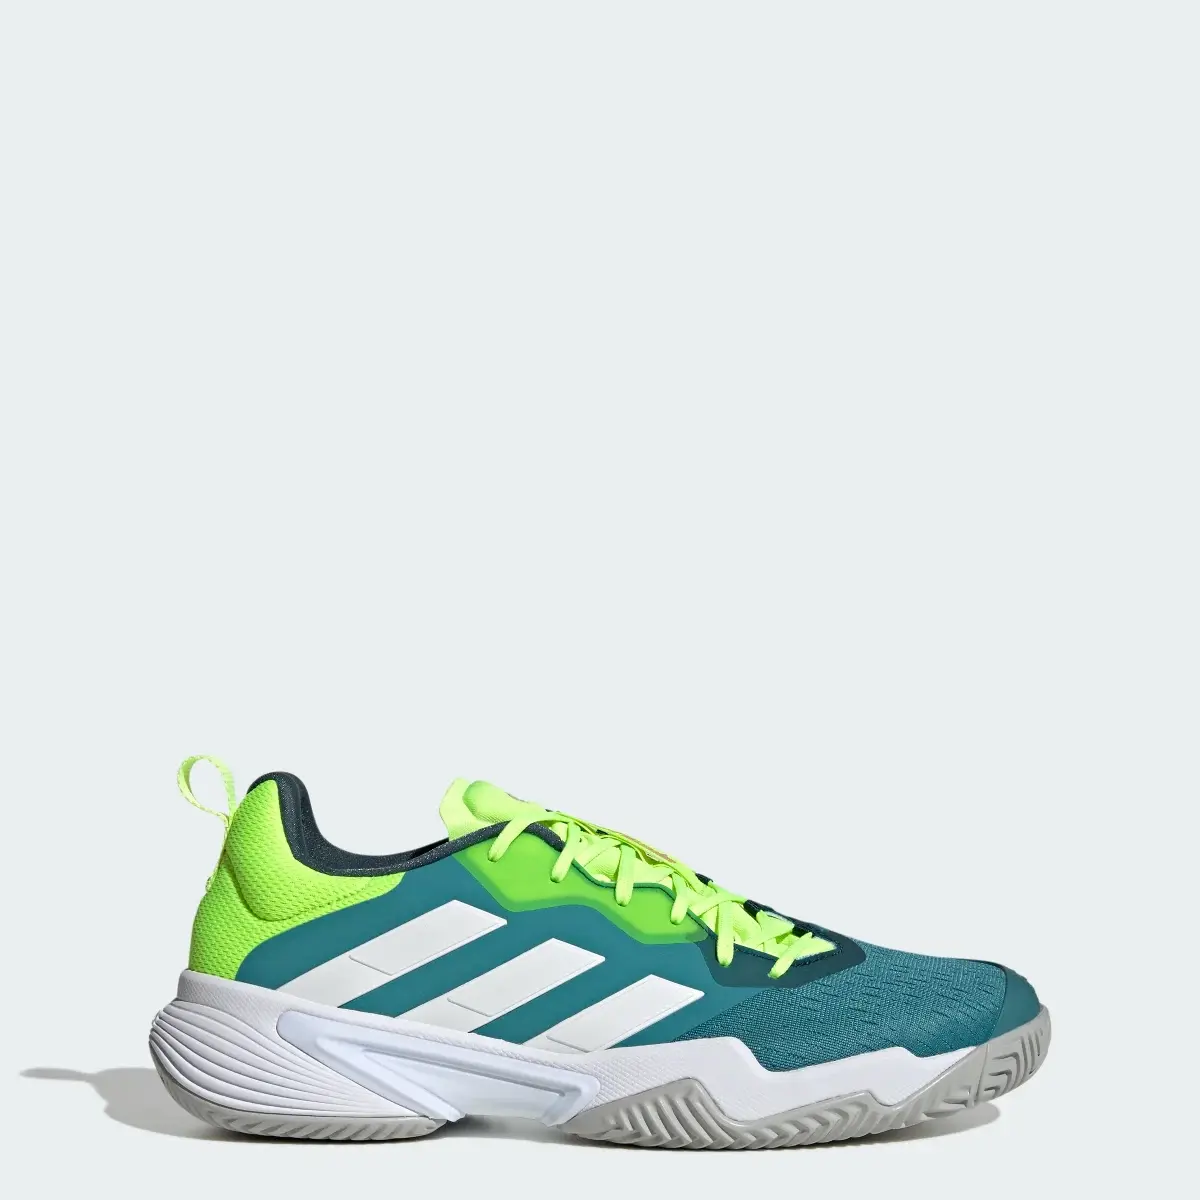 Adidas Barricade Tennis Shoes. 1